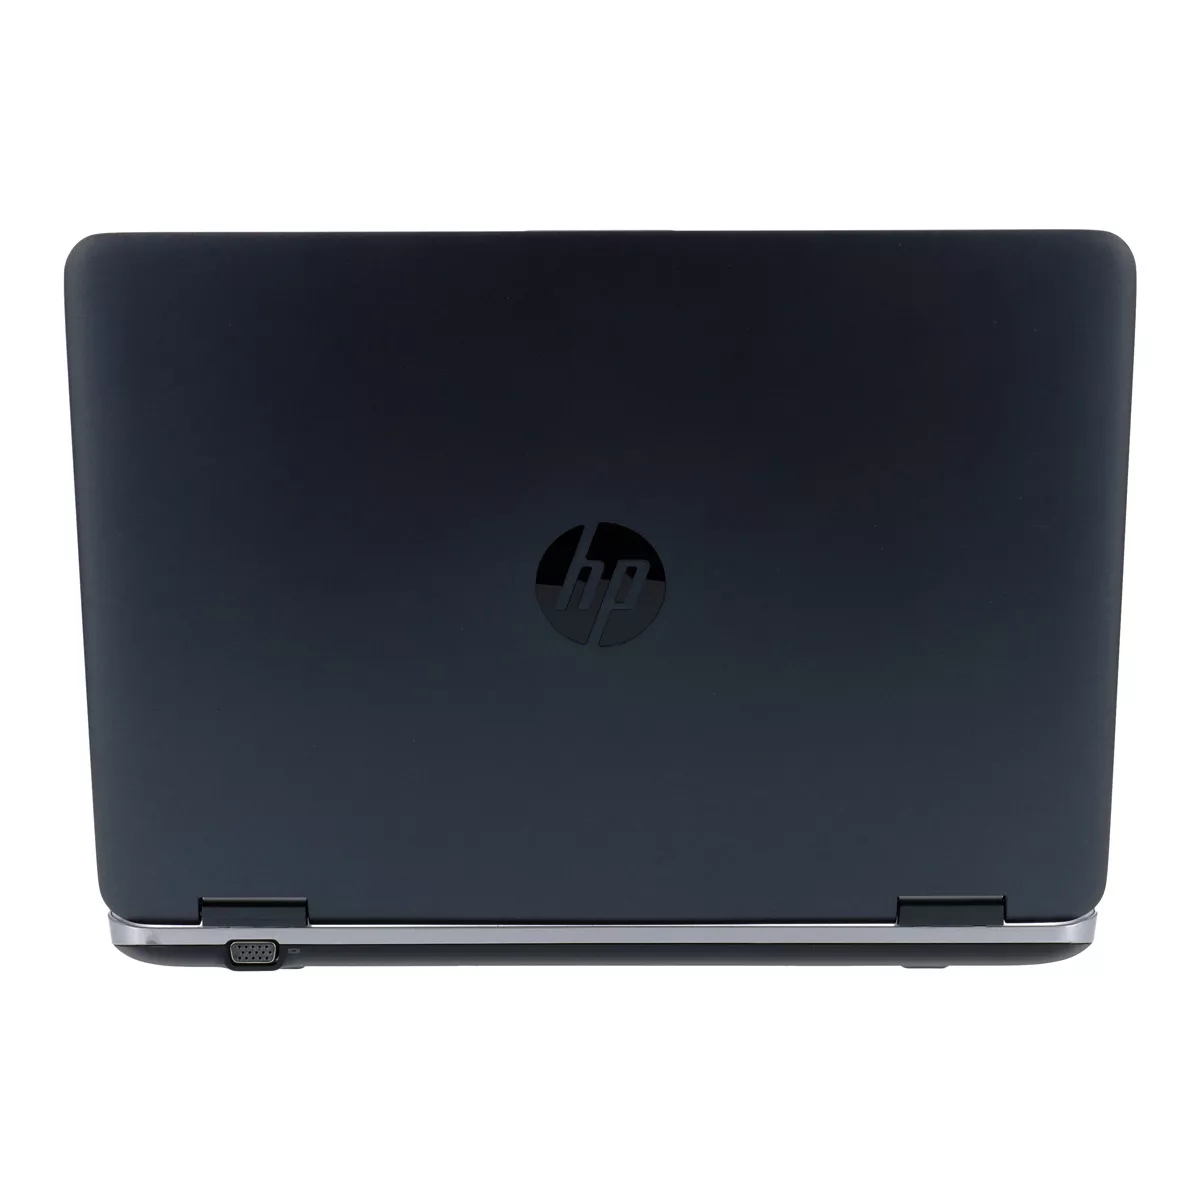 HP ProBook 640 G2 Core i5 6300U 8 GB 240 GB M.2 SSD Webcam B